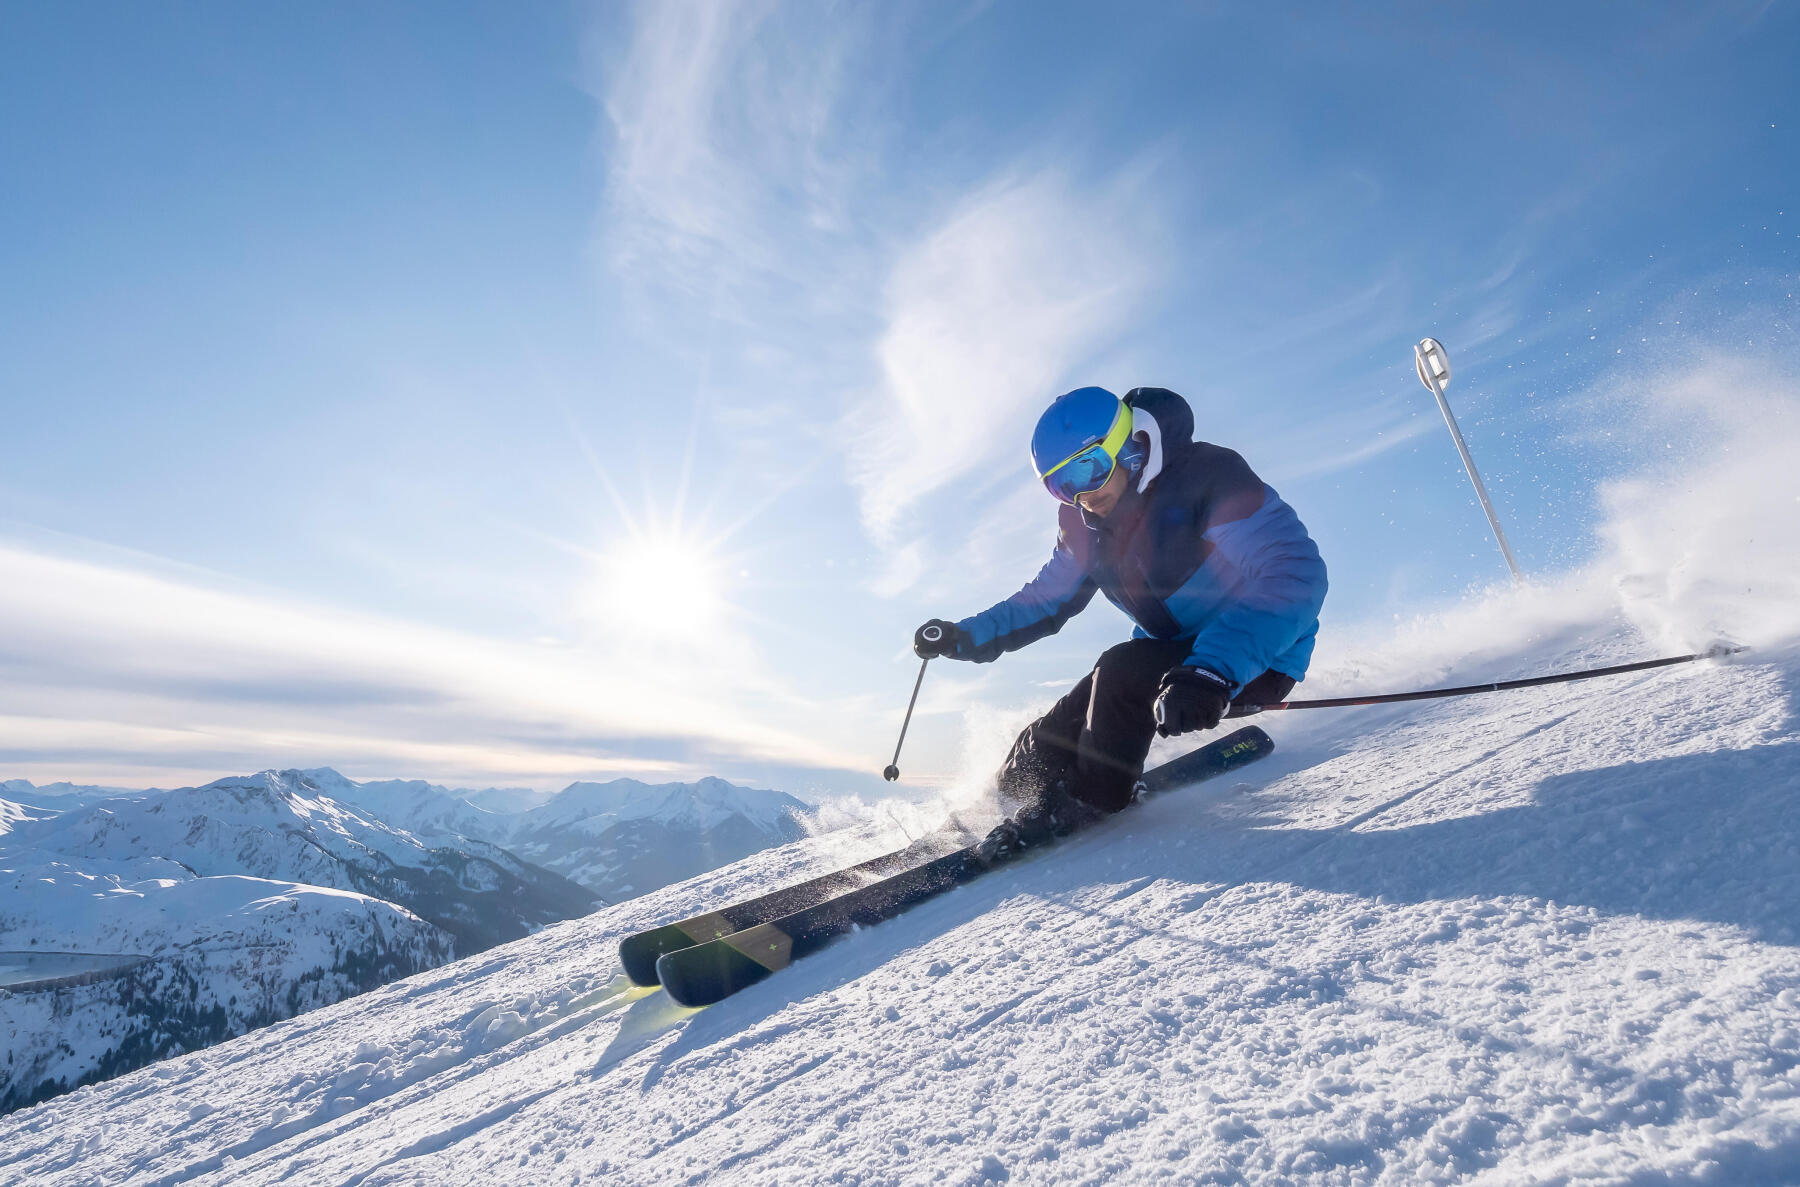 Skiing: endurance, cardio, agility, sheathing, all its benefits